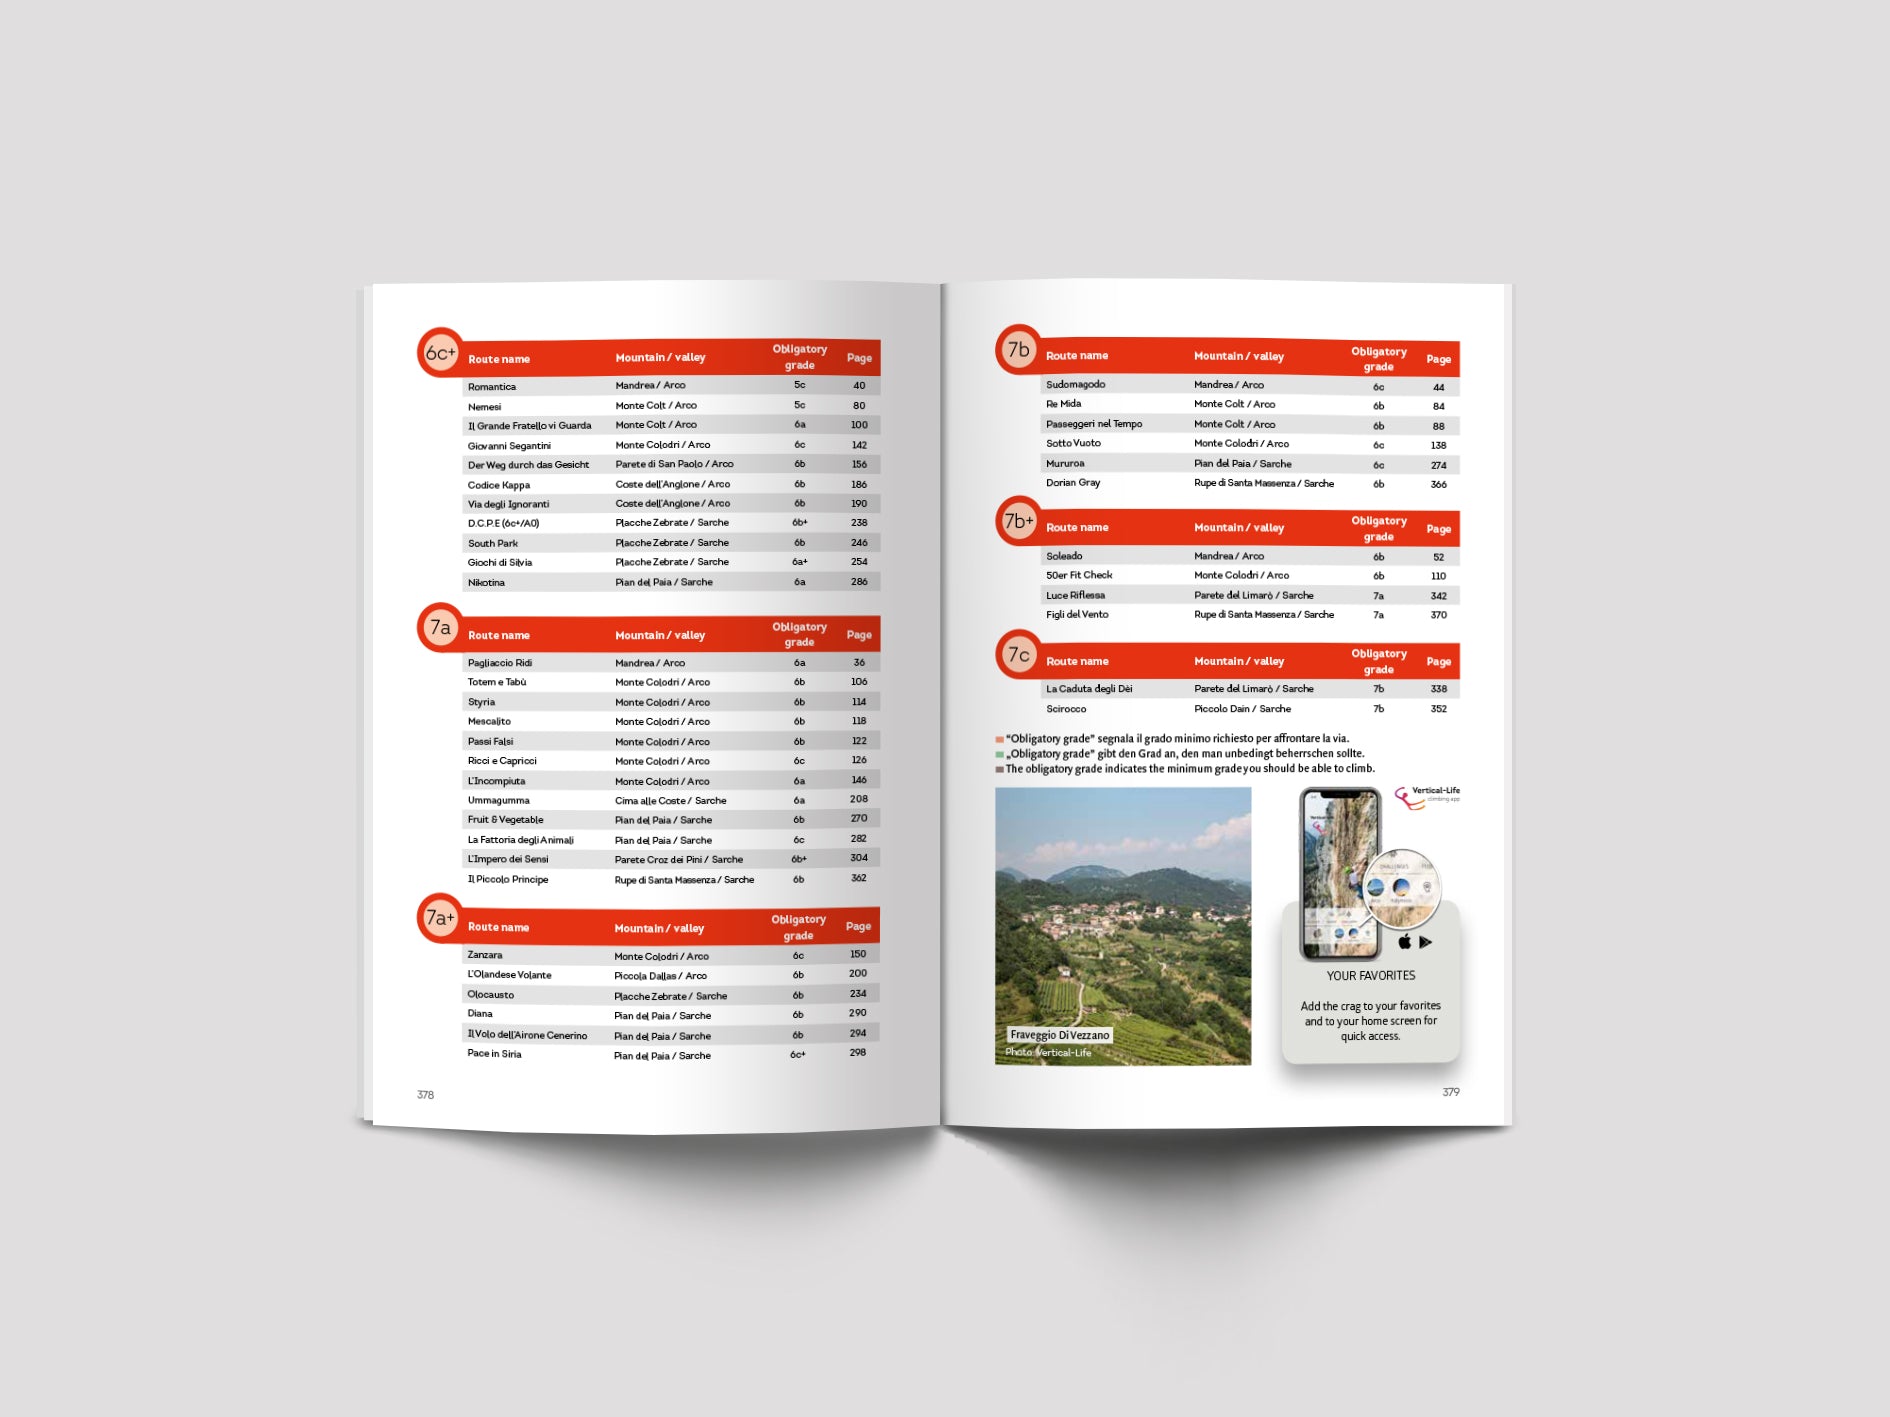 Arco multi-pitch climbing (2017), guidebook